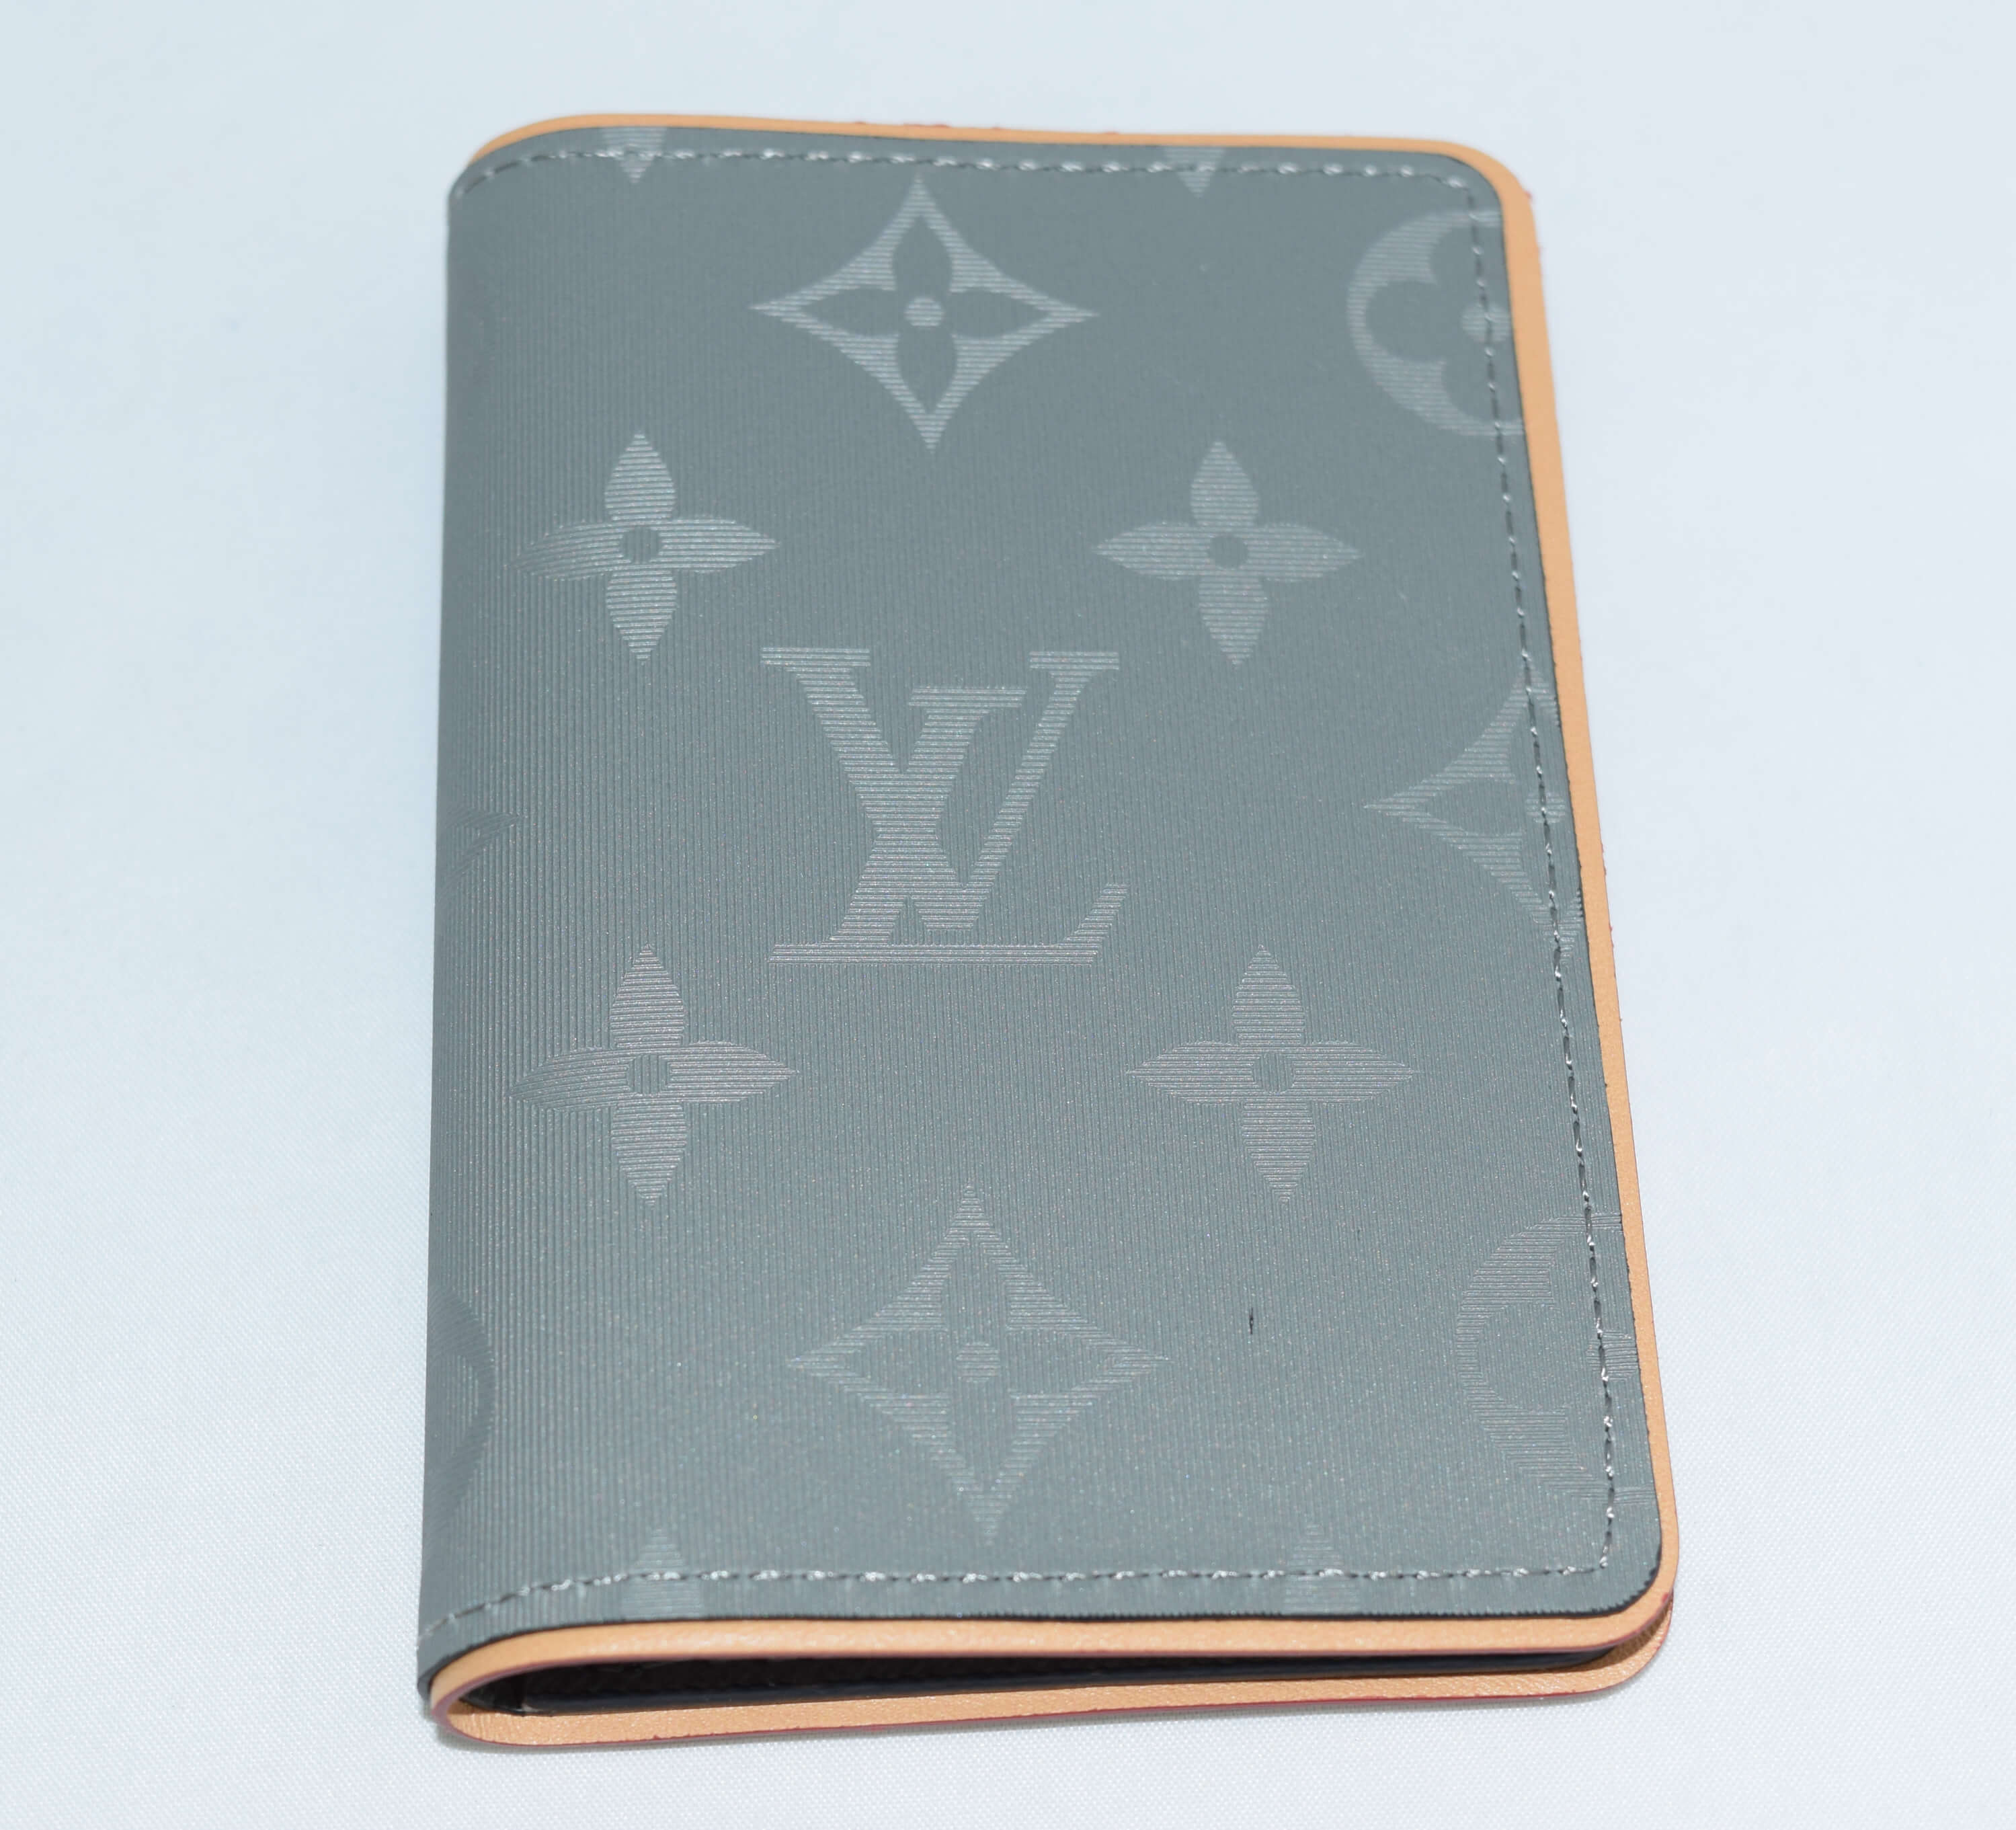 Louis Vuitton Kim Jones titanium collection pocket organizer for